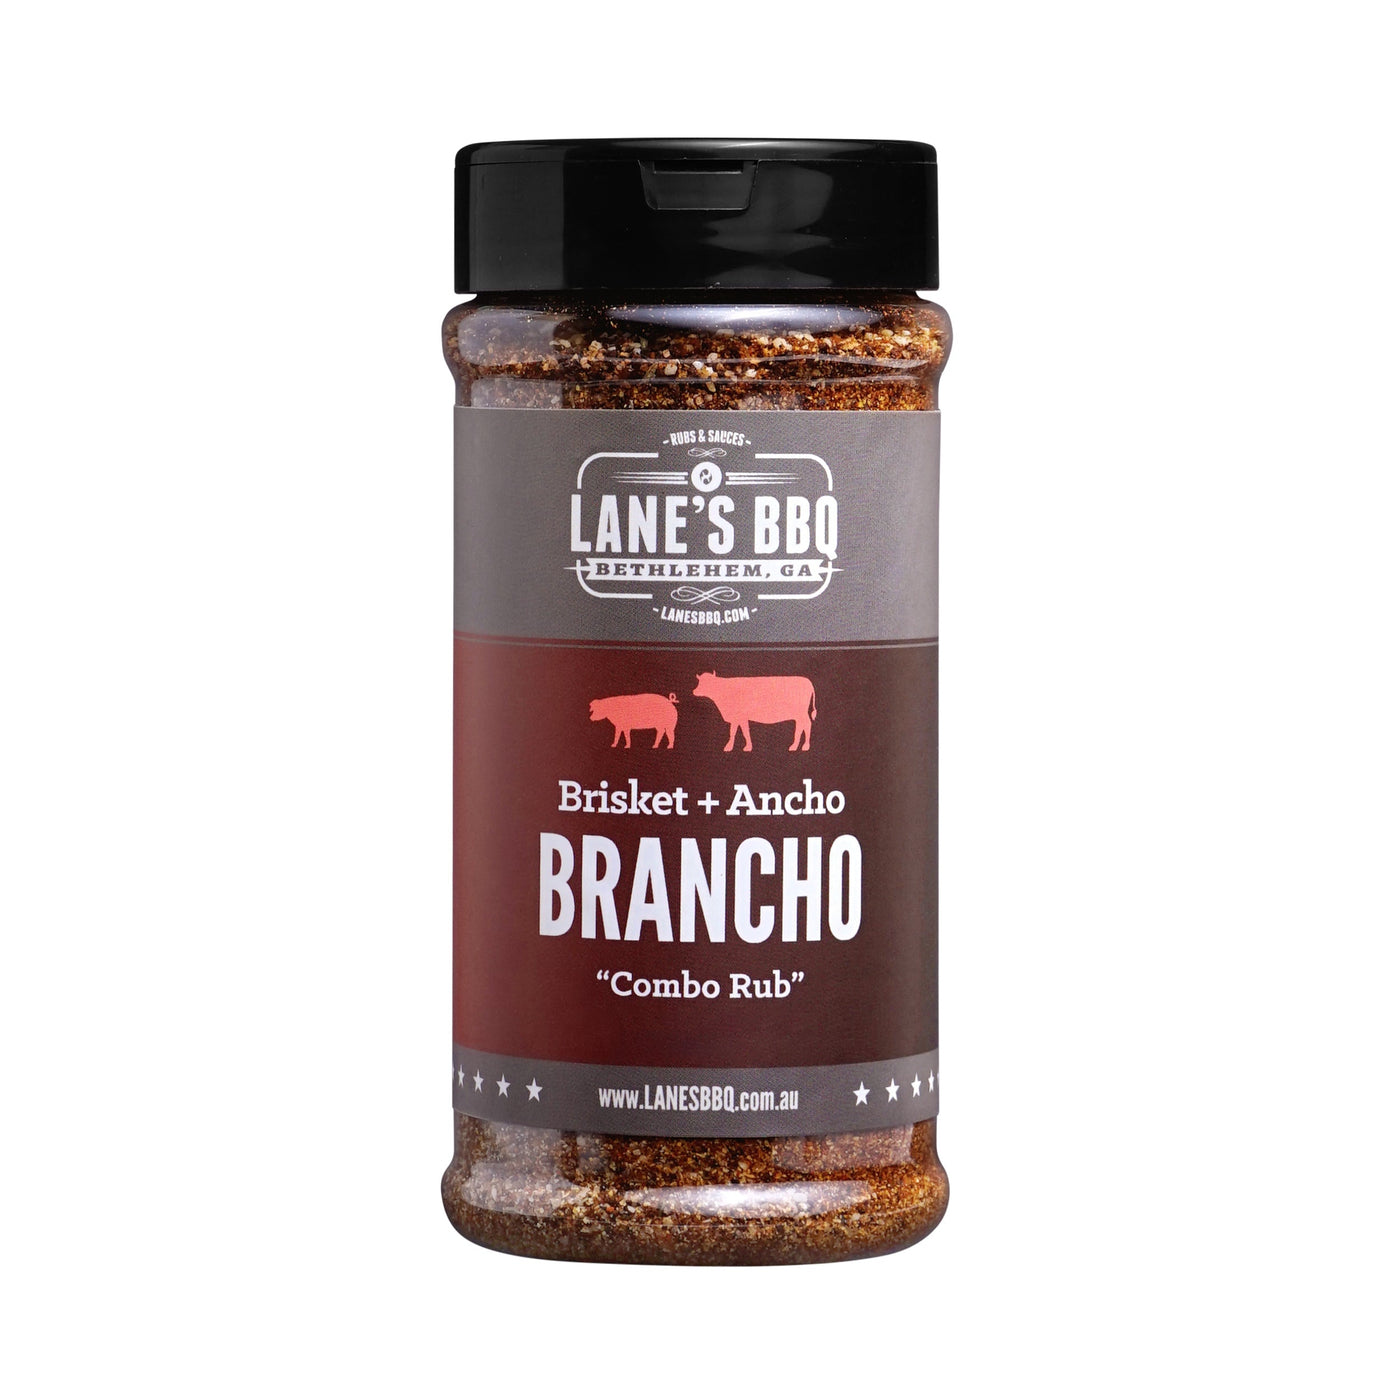 Lane's BBQ Brisket + Ancho Combo Rub 323g